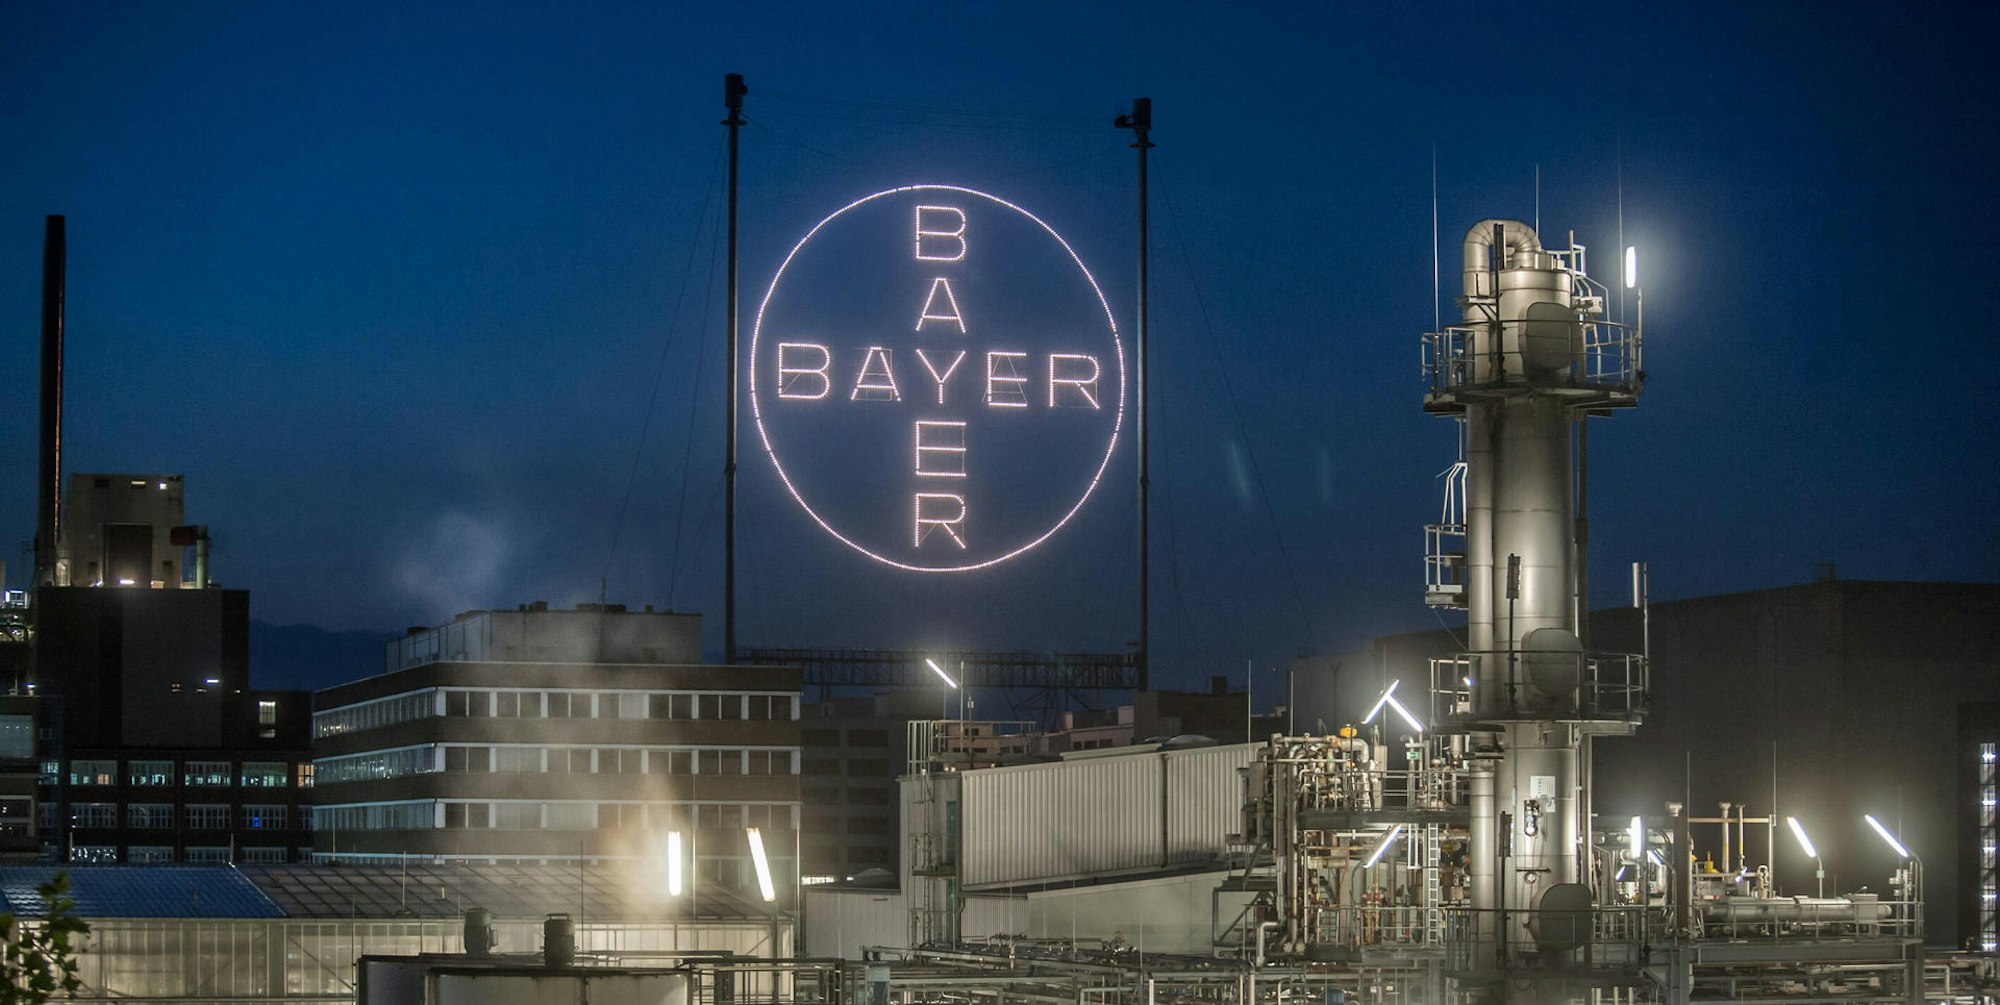 Bayer-Werk Bayerkreuz